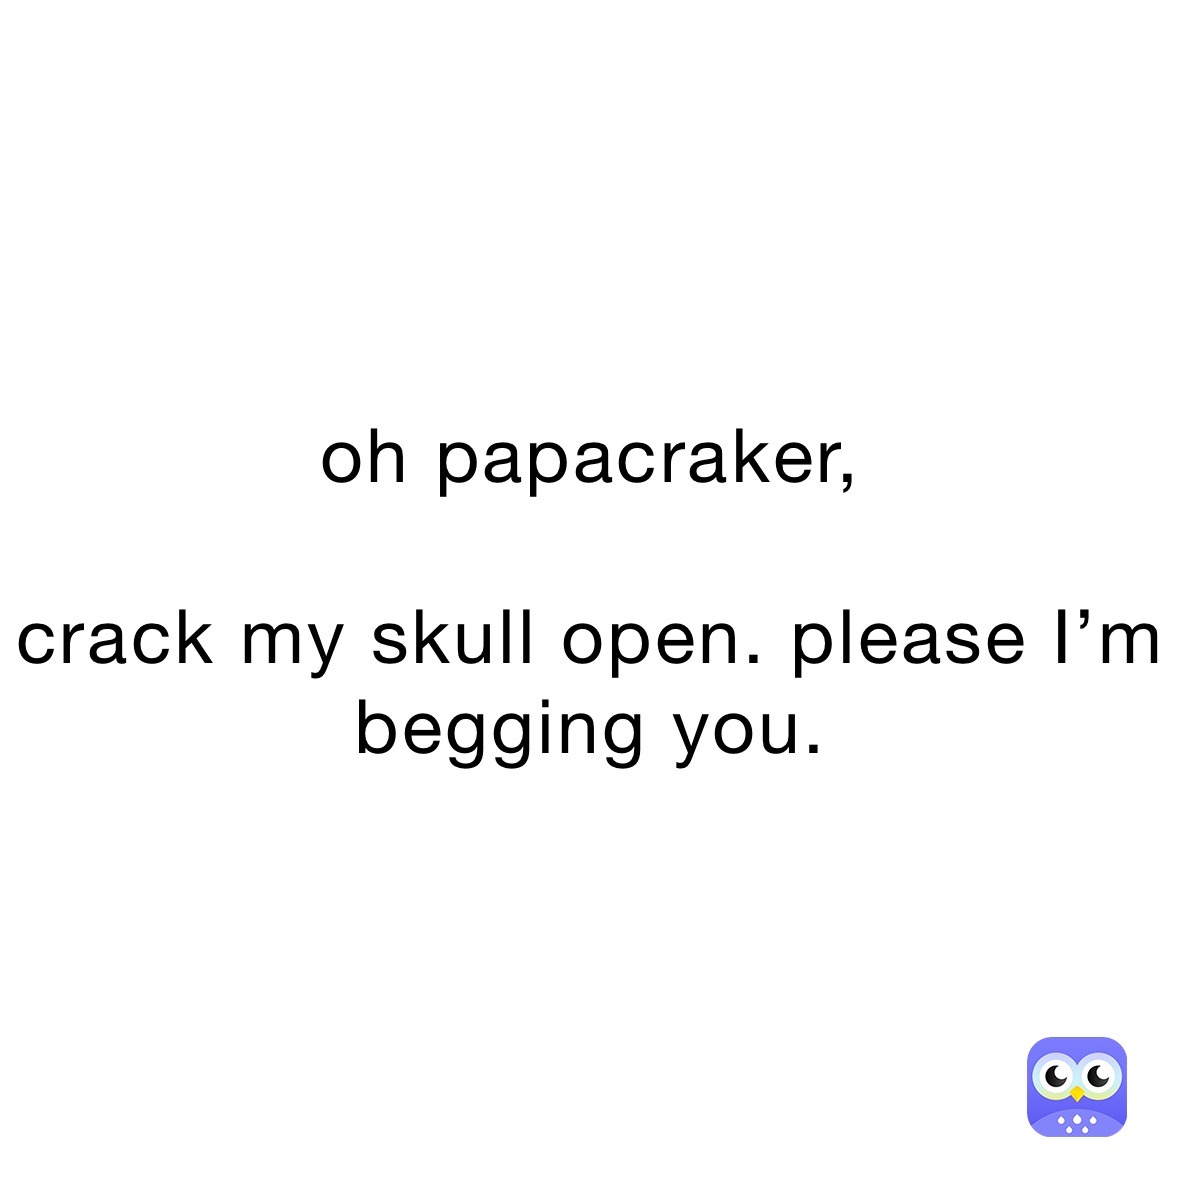 oh papacraker,

crack my skull open. please I’m begging you.